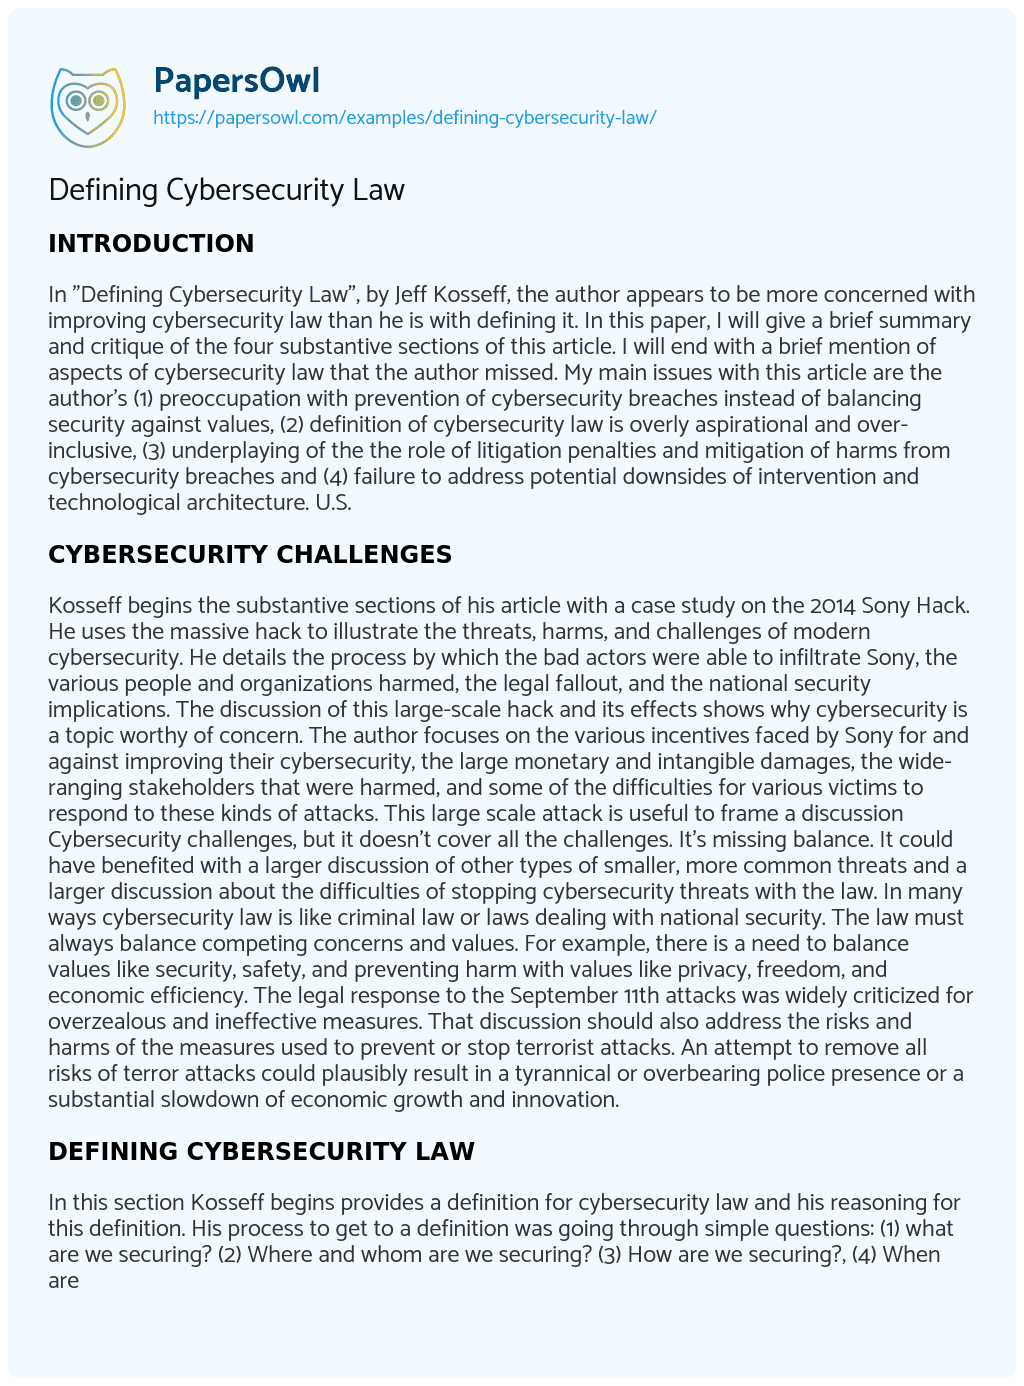 Essay on Defining Cybersecurity Law